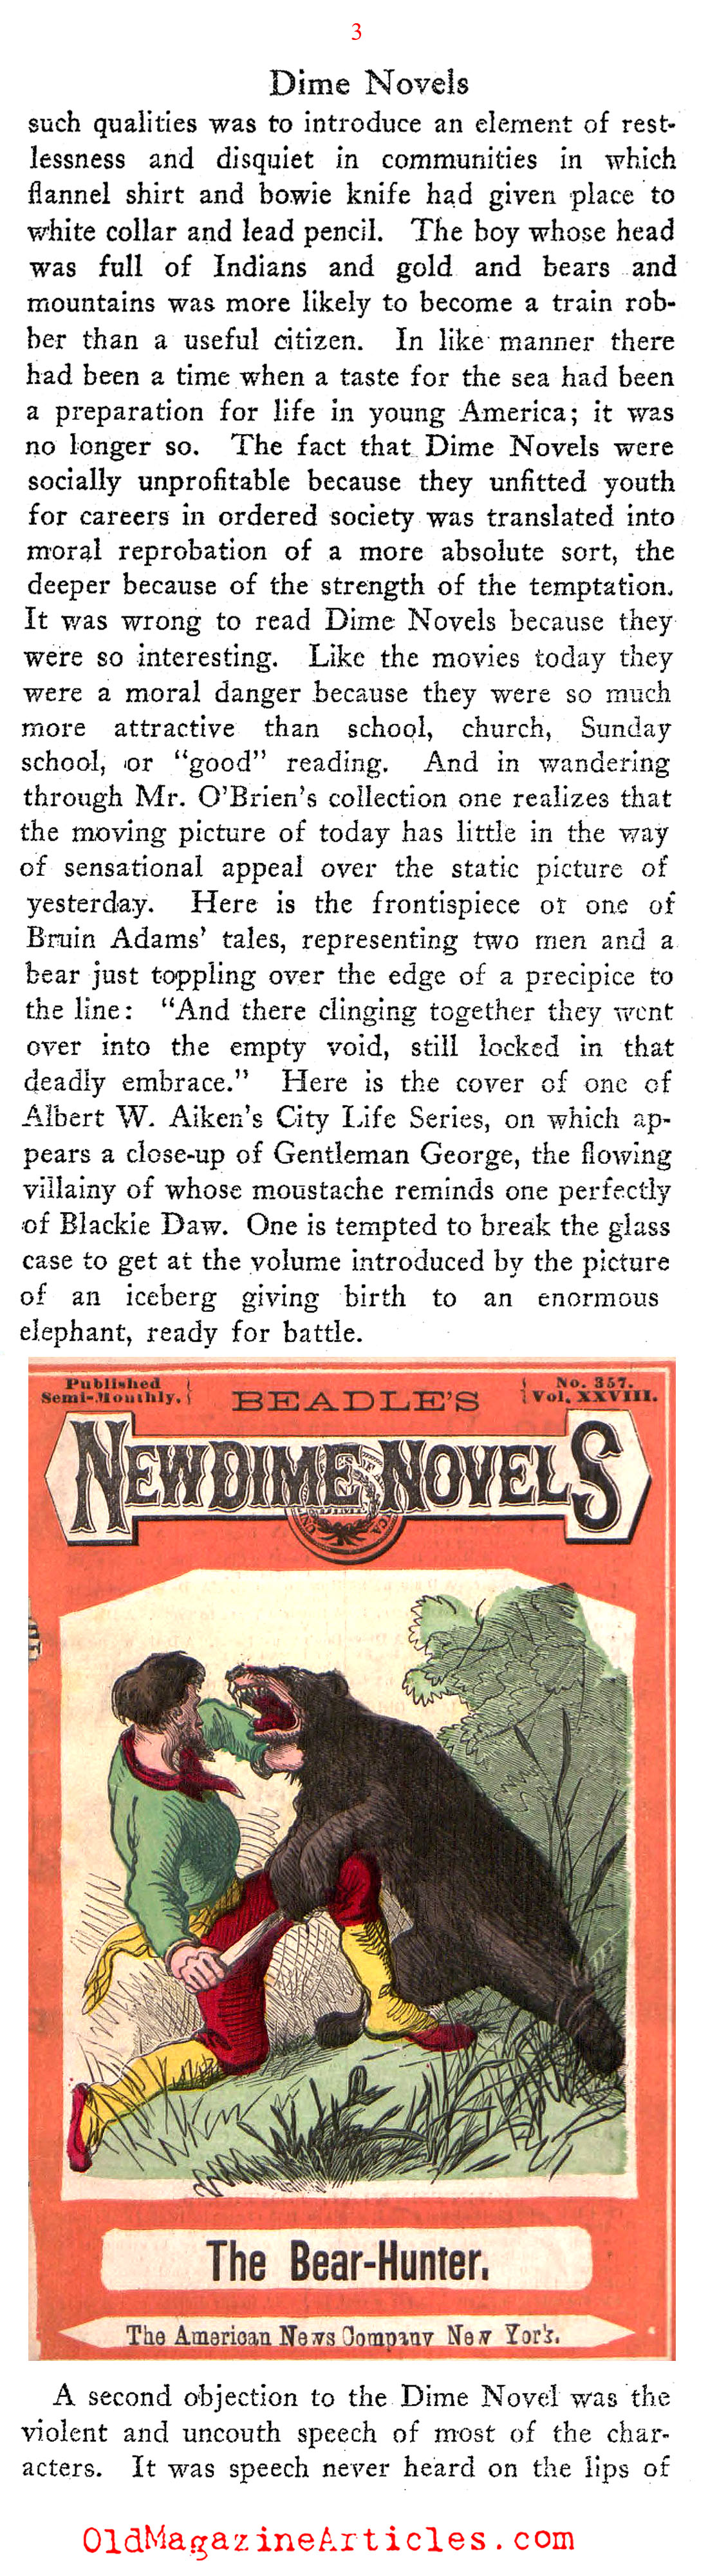 NY Public Library Exhibits Dime Novels (The New Republic, 1922)